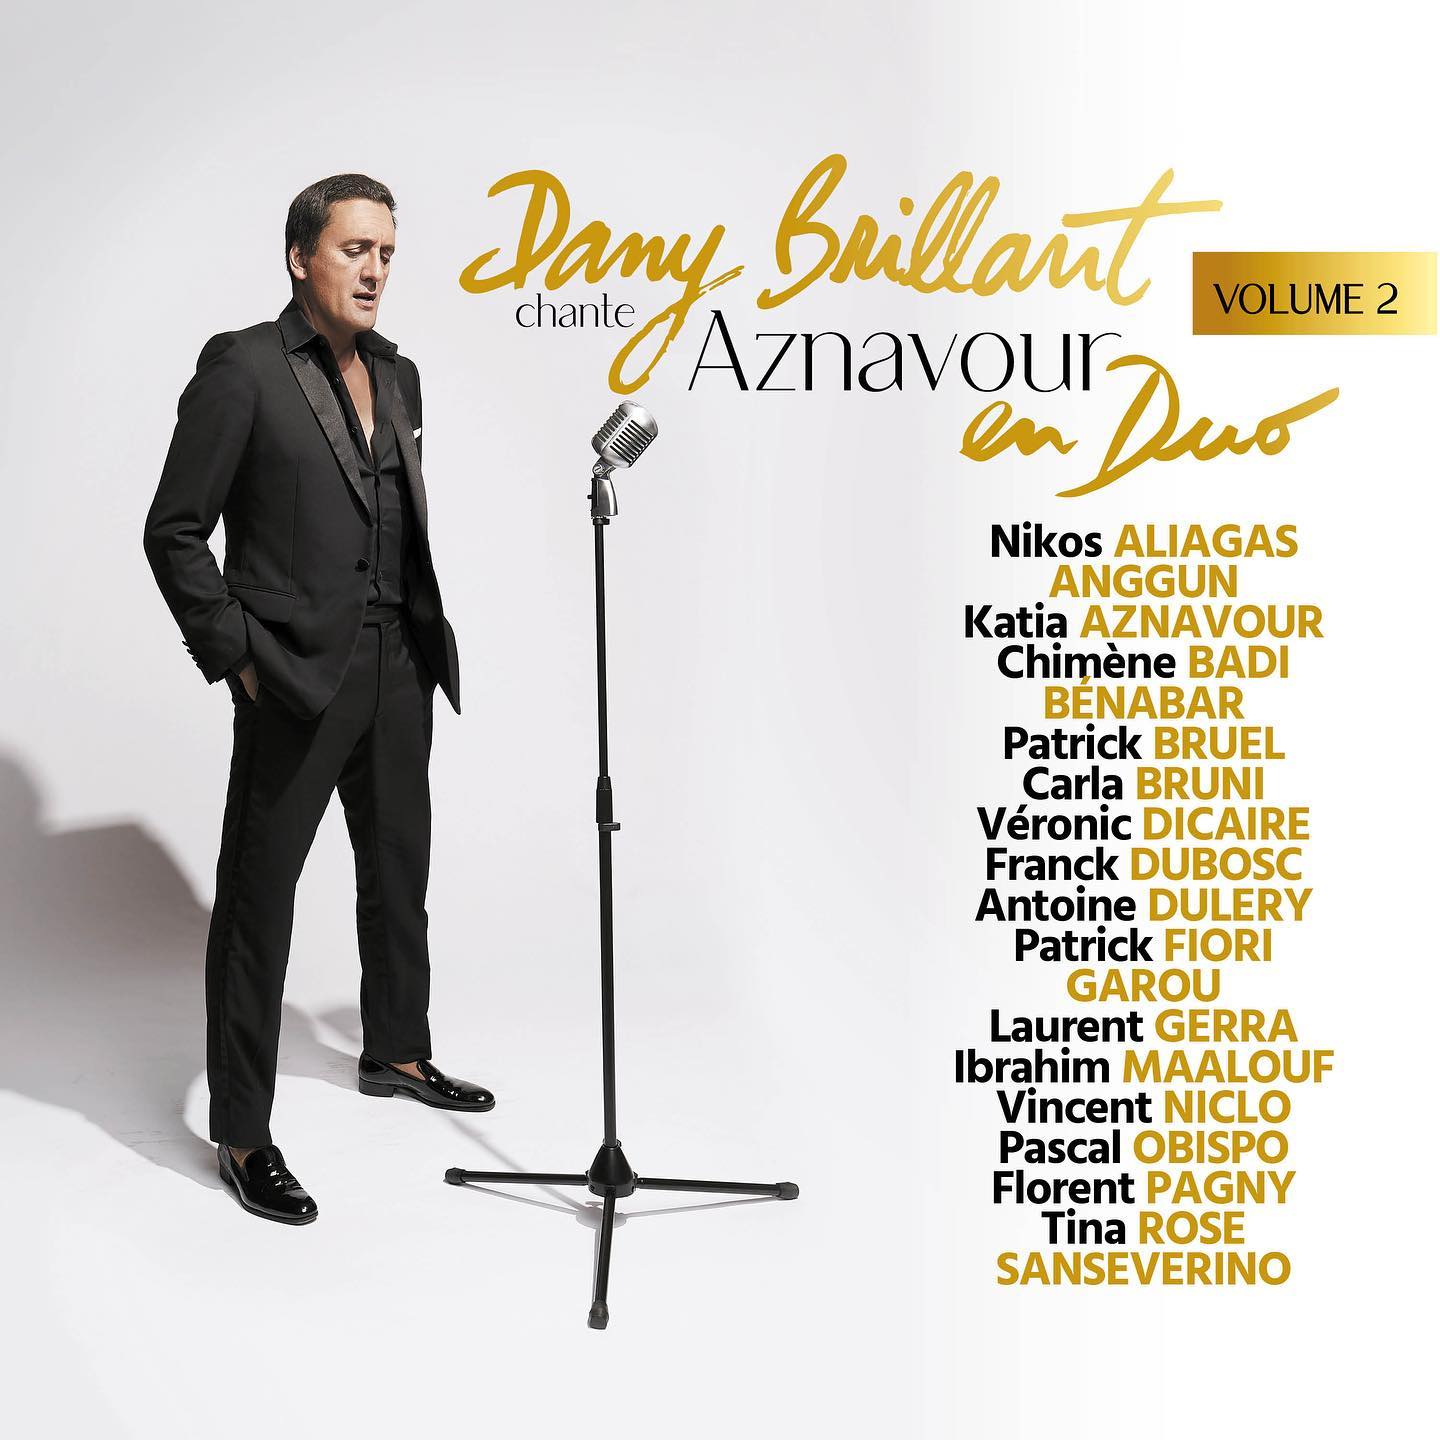 Dany Brillant - Charles Aznavour - duo - album duo -